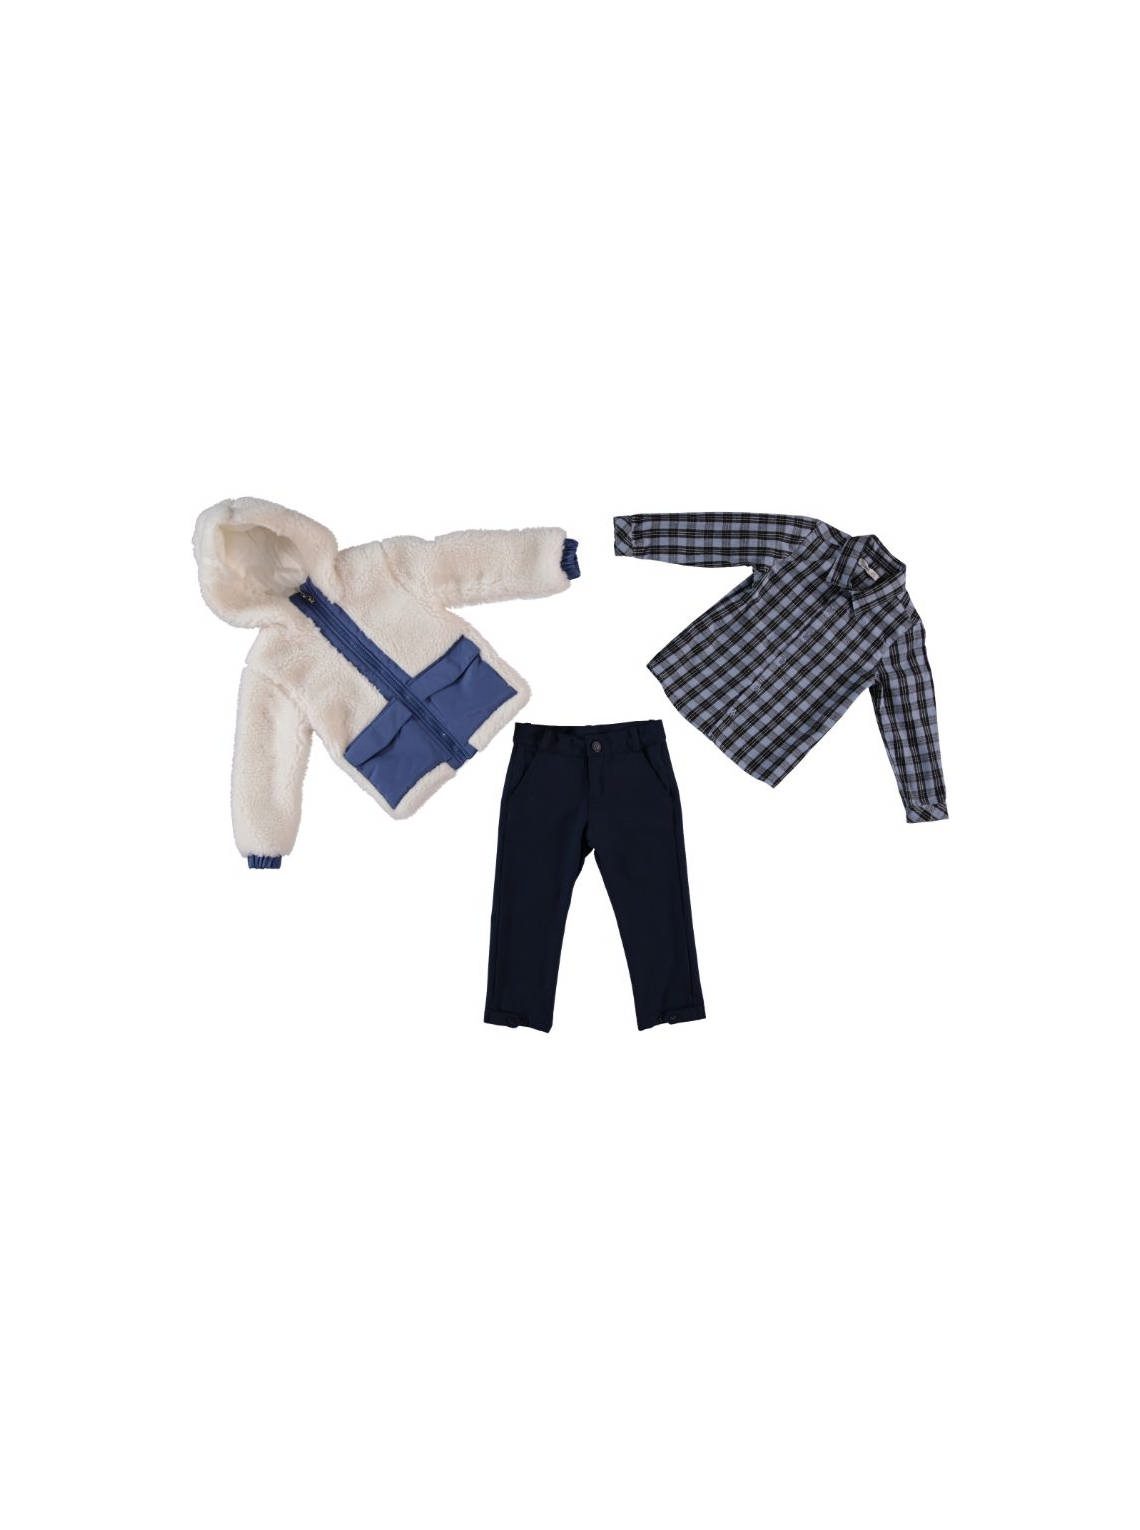 Exclusive Brand - Boy 3 Pieces Winter Set ( Coats + Pants + Shirt ) / 2-6Y Or 6-10Y - Kids Fashion Turkey